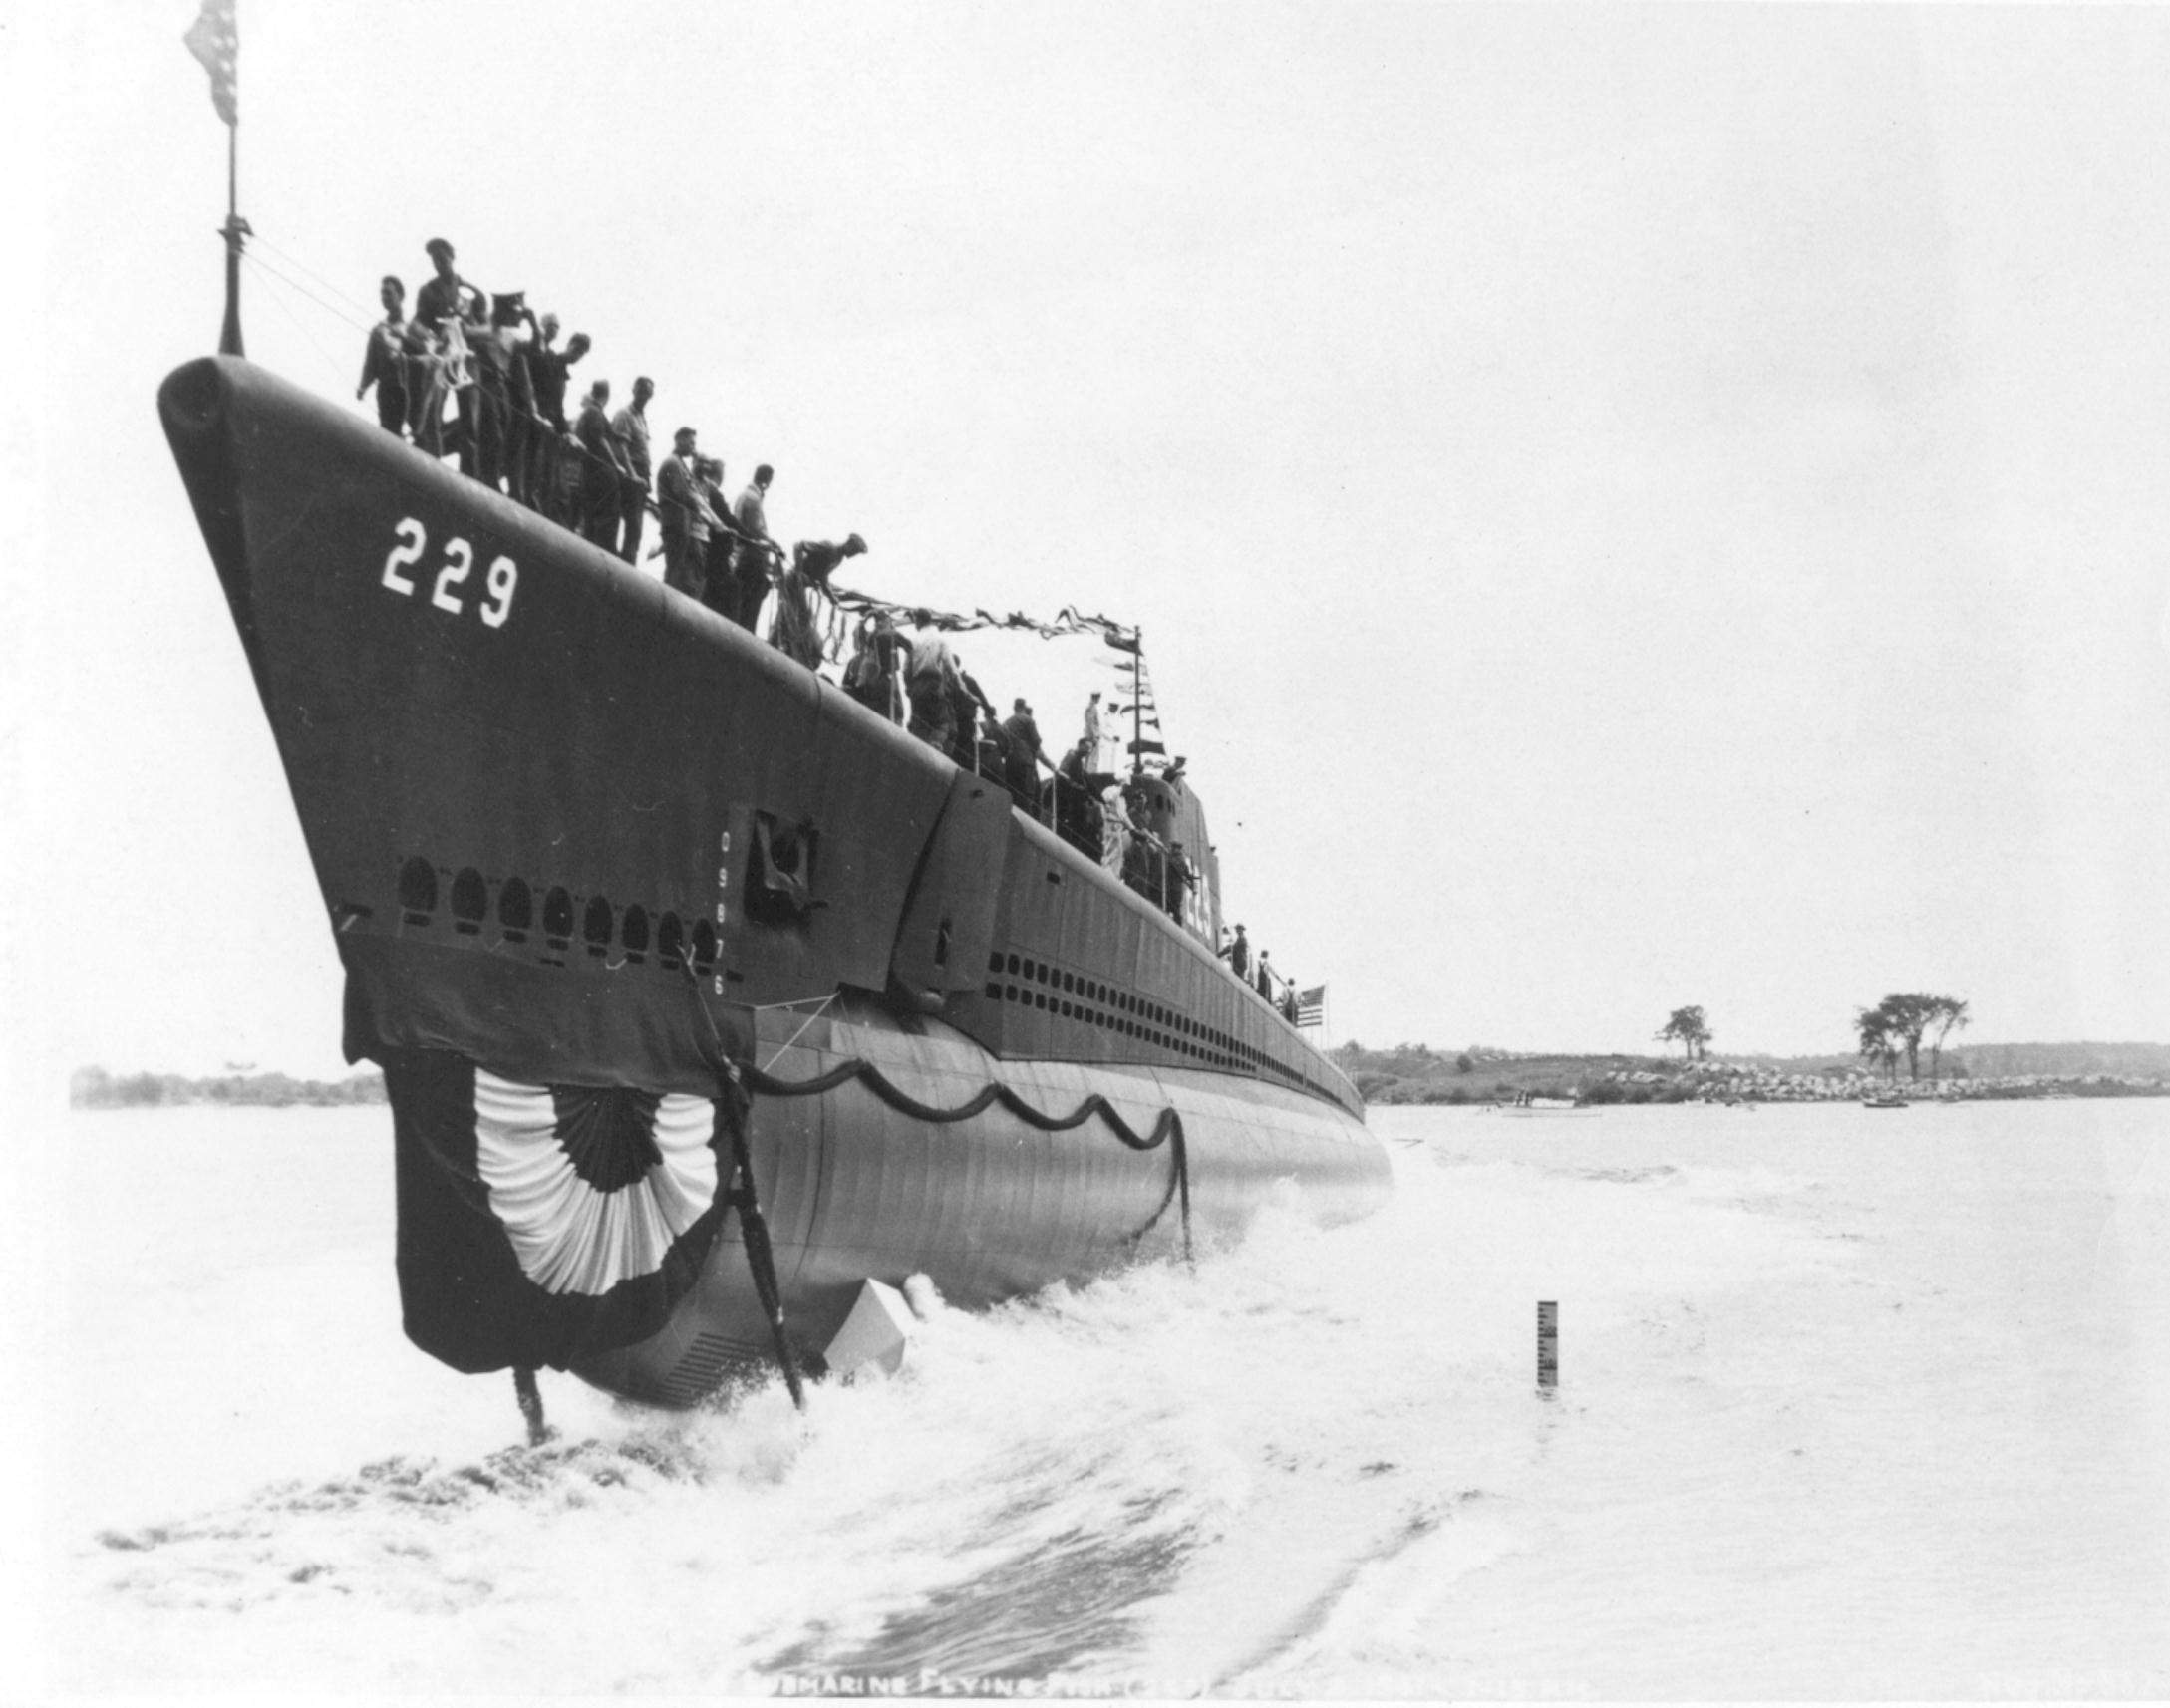 Launching of submarine Flying Fish, Portsmouth Naval Shipyard, Kittery, Maine, United States, 9 Jul 1941, photo 1 of 2